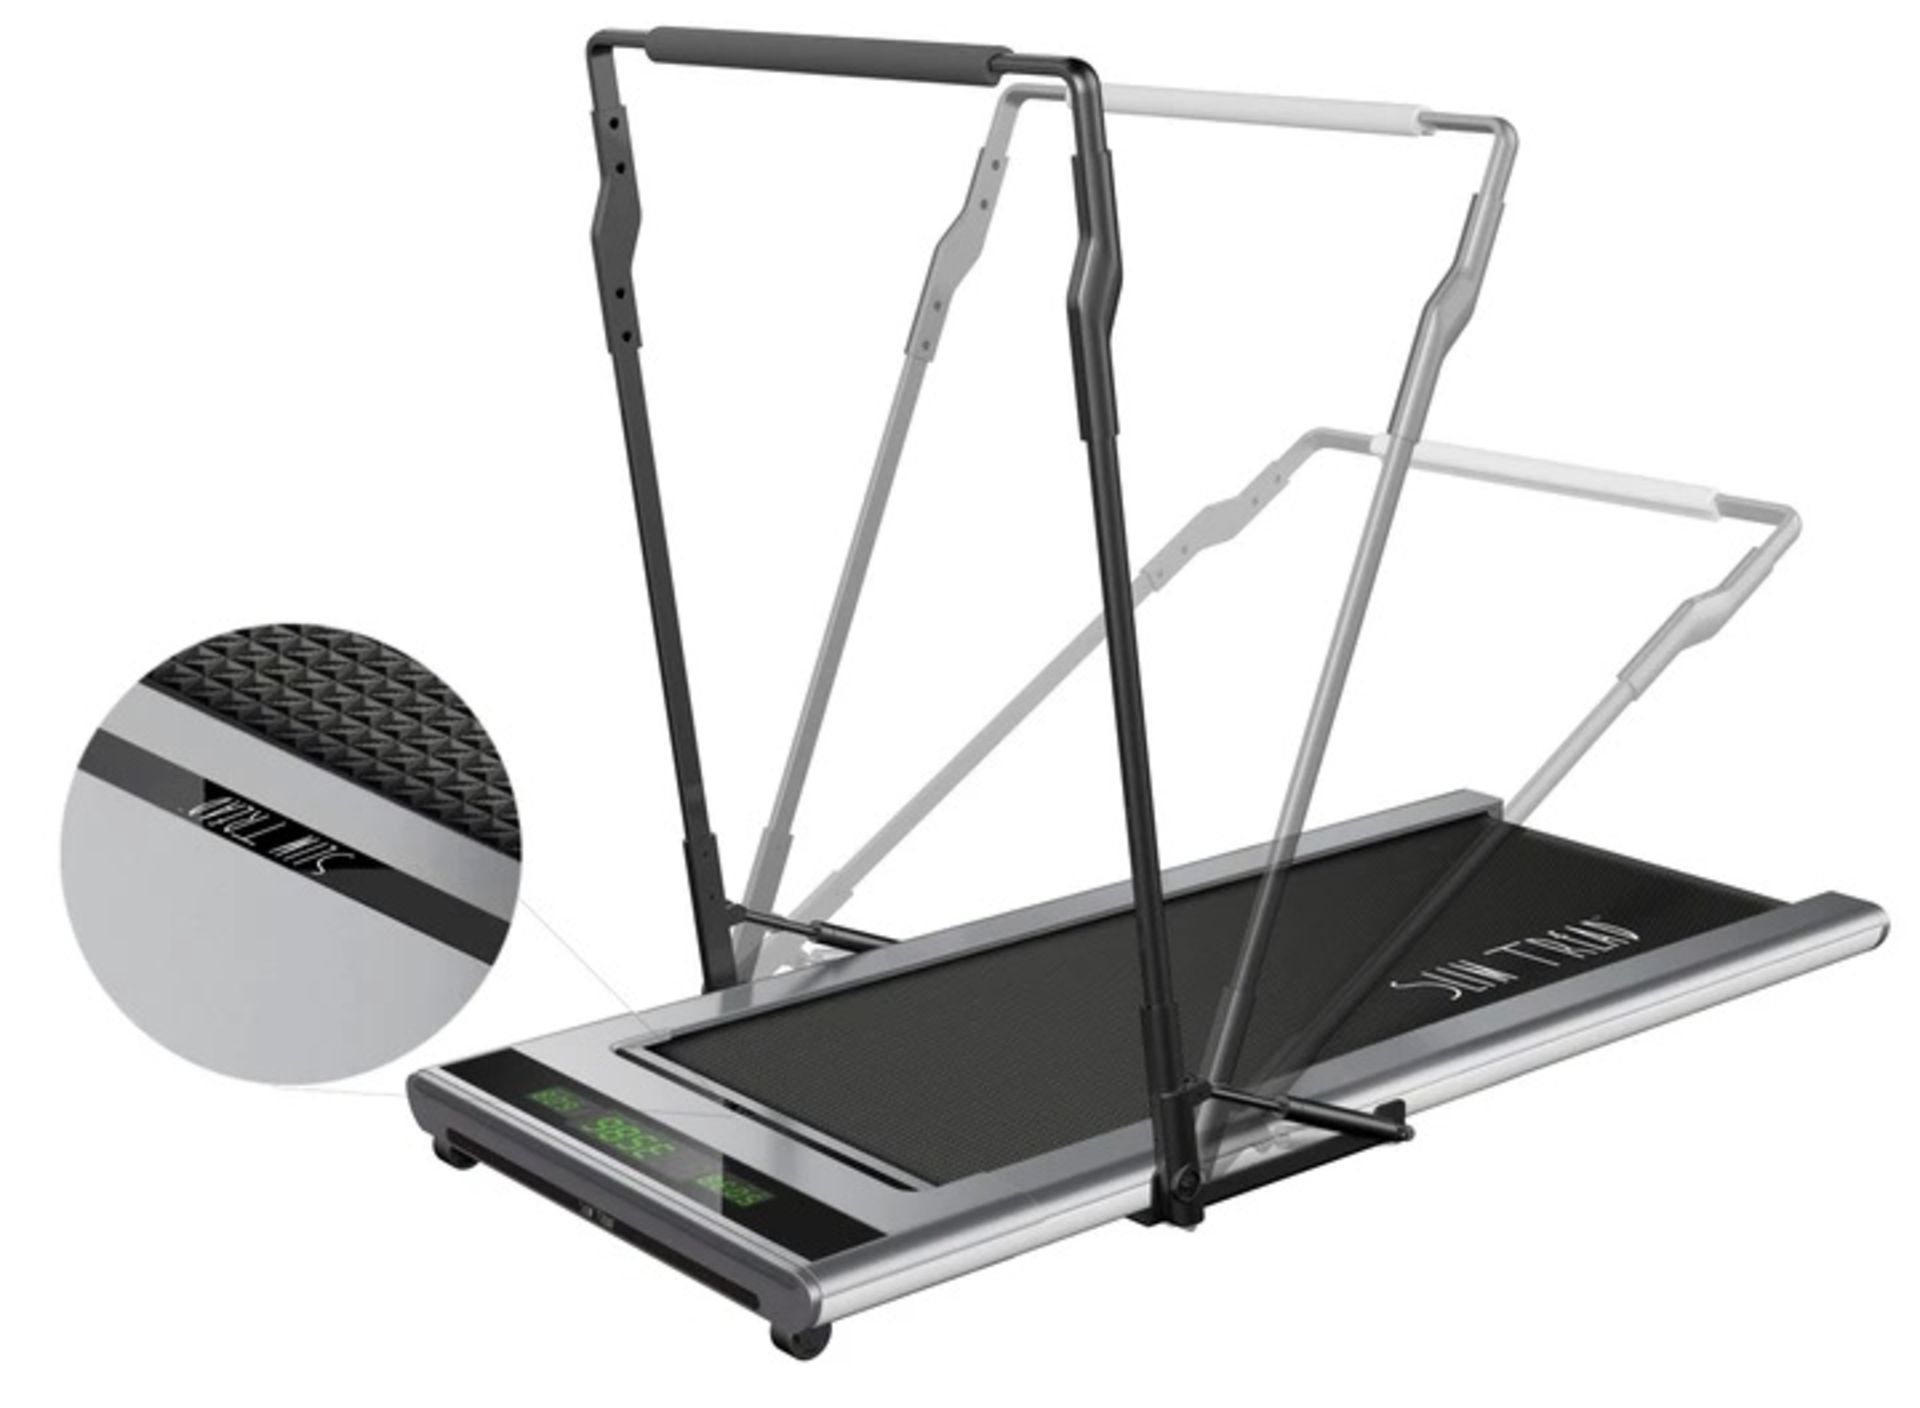 1 x Slim Tread Ultra Thin Smart Treadmill Running Machine - Brand New Sealed Stock - RRP £799! - Image 21 of 23